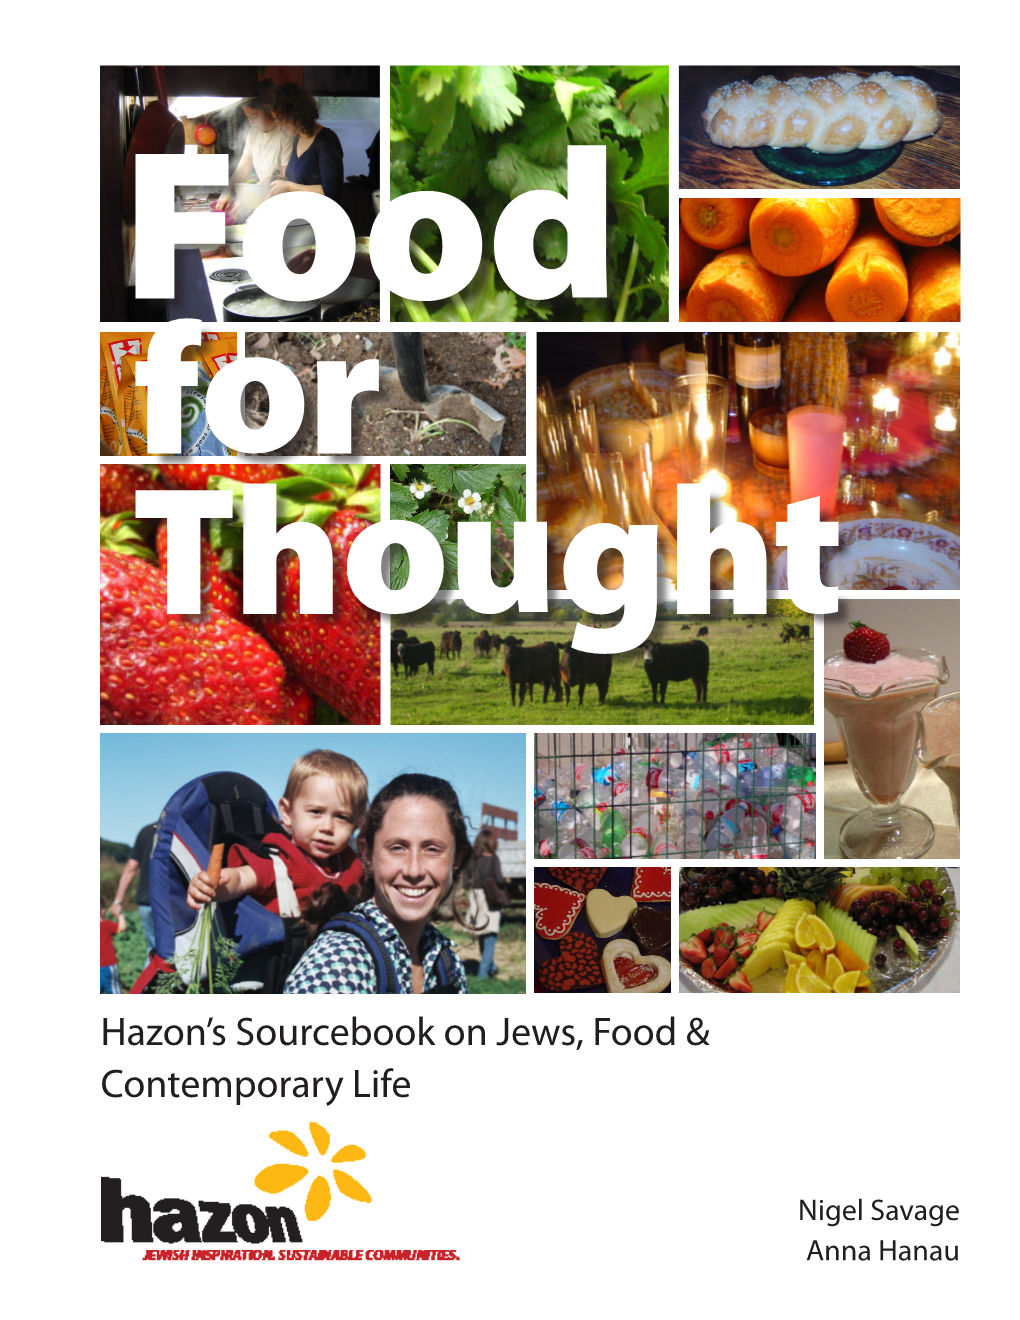 Hazon's Sourcebook on Jews, Food & Contemporary Life